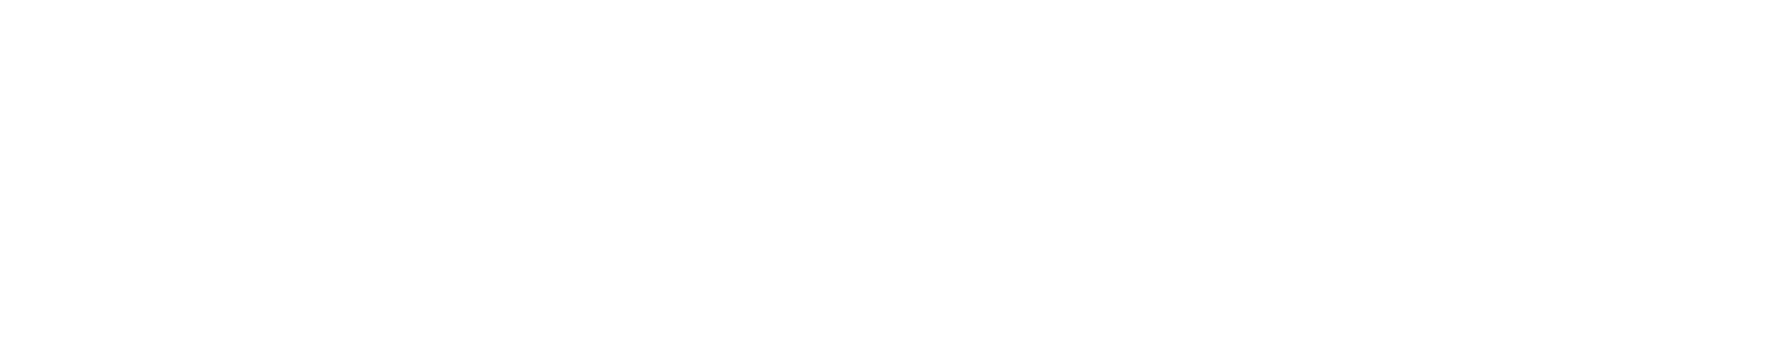 Junta Andalucia logo